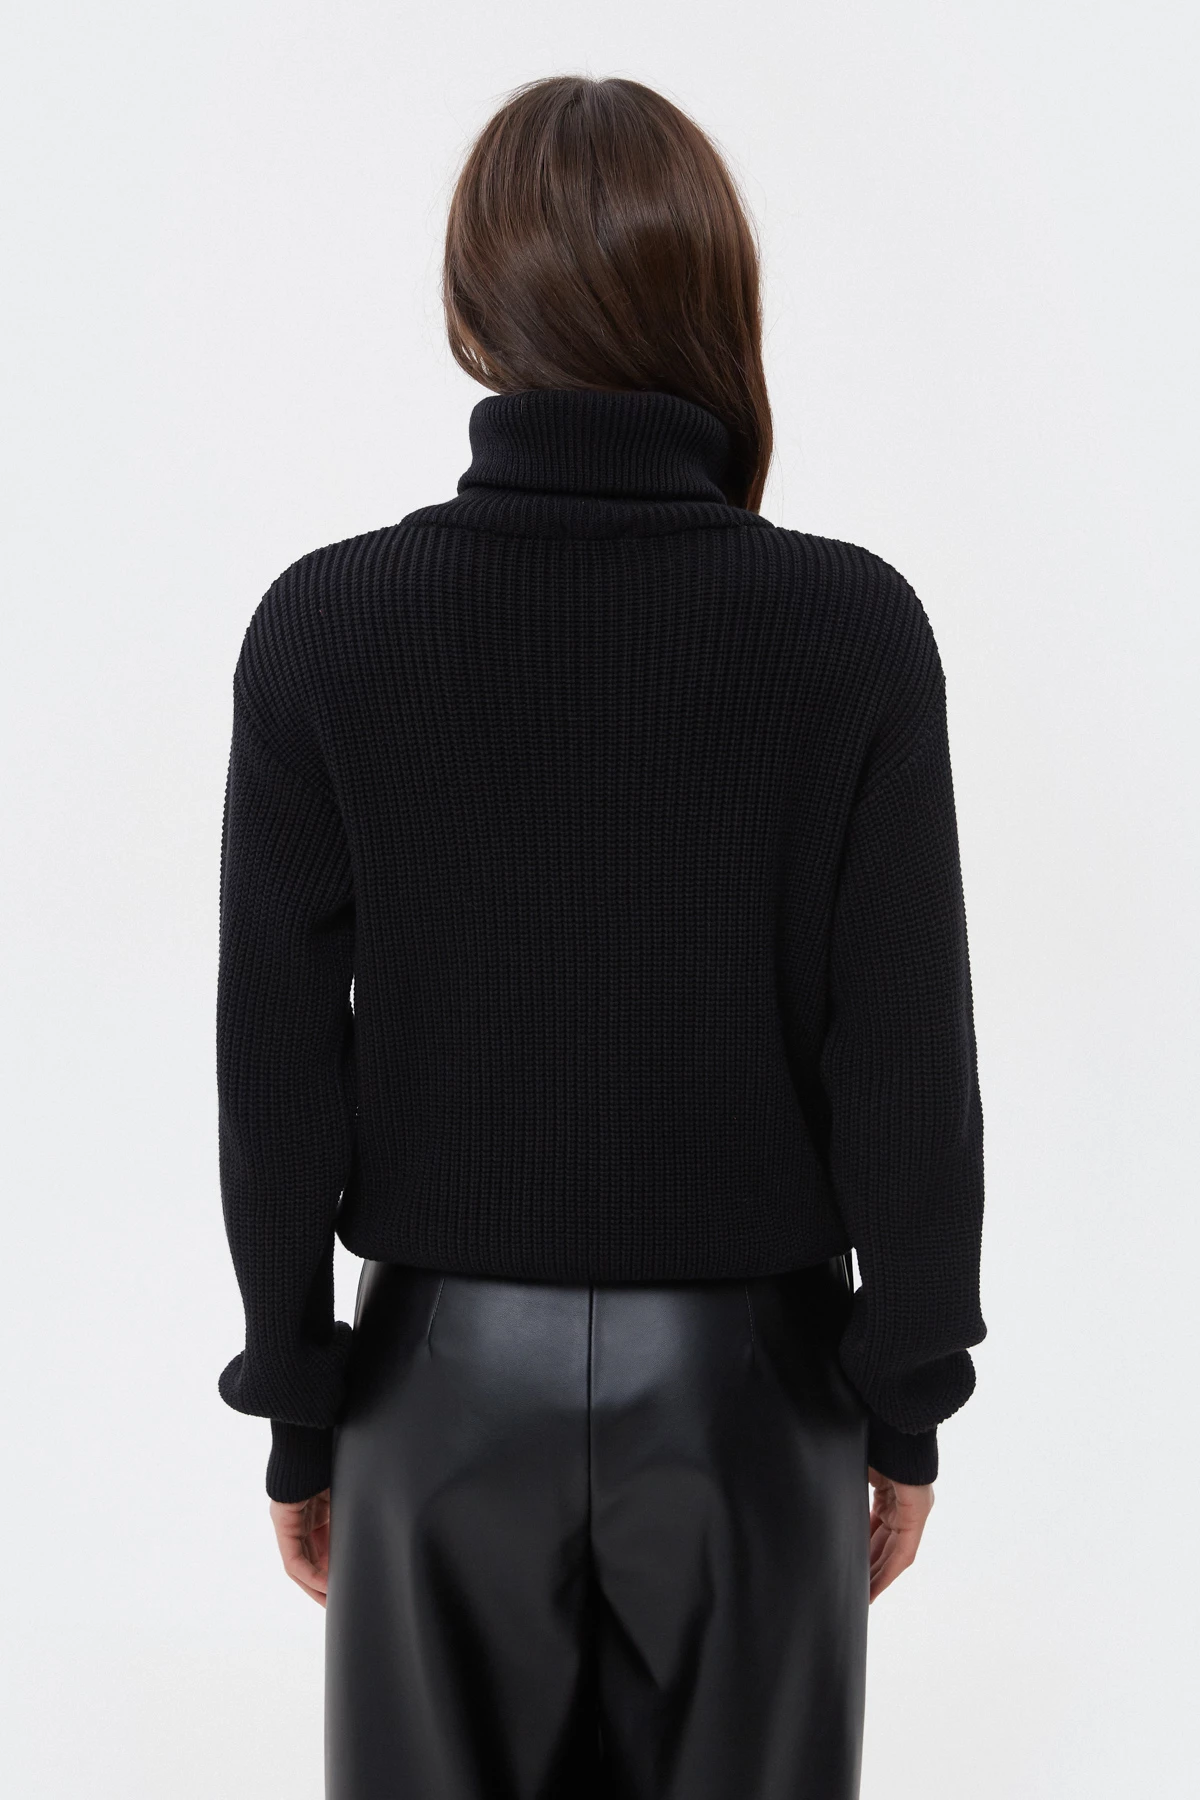 Black cotton zip-up knit sweater, photo 5